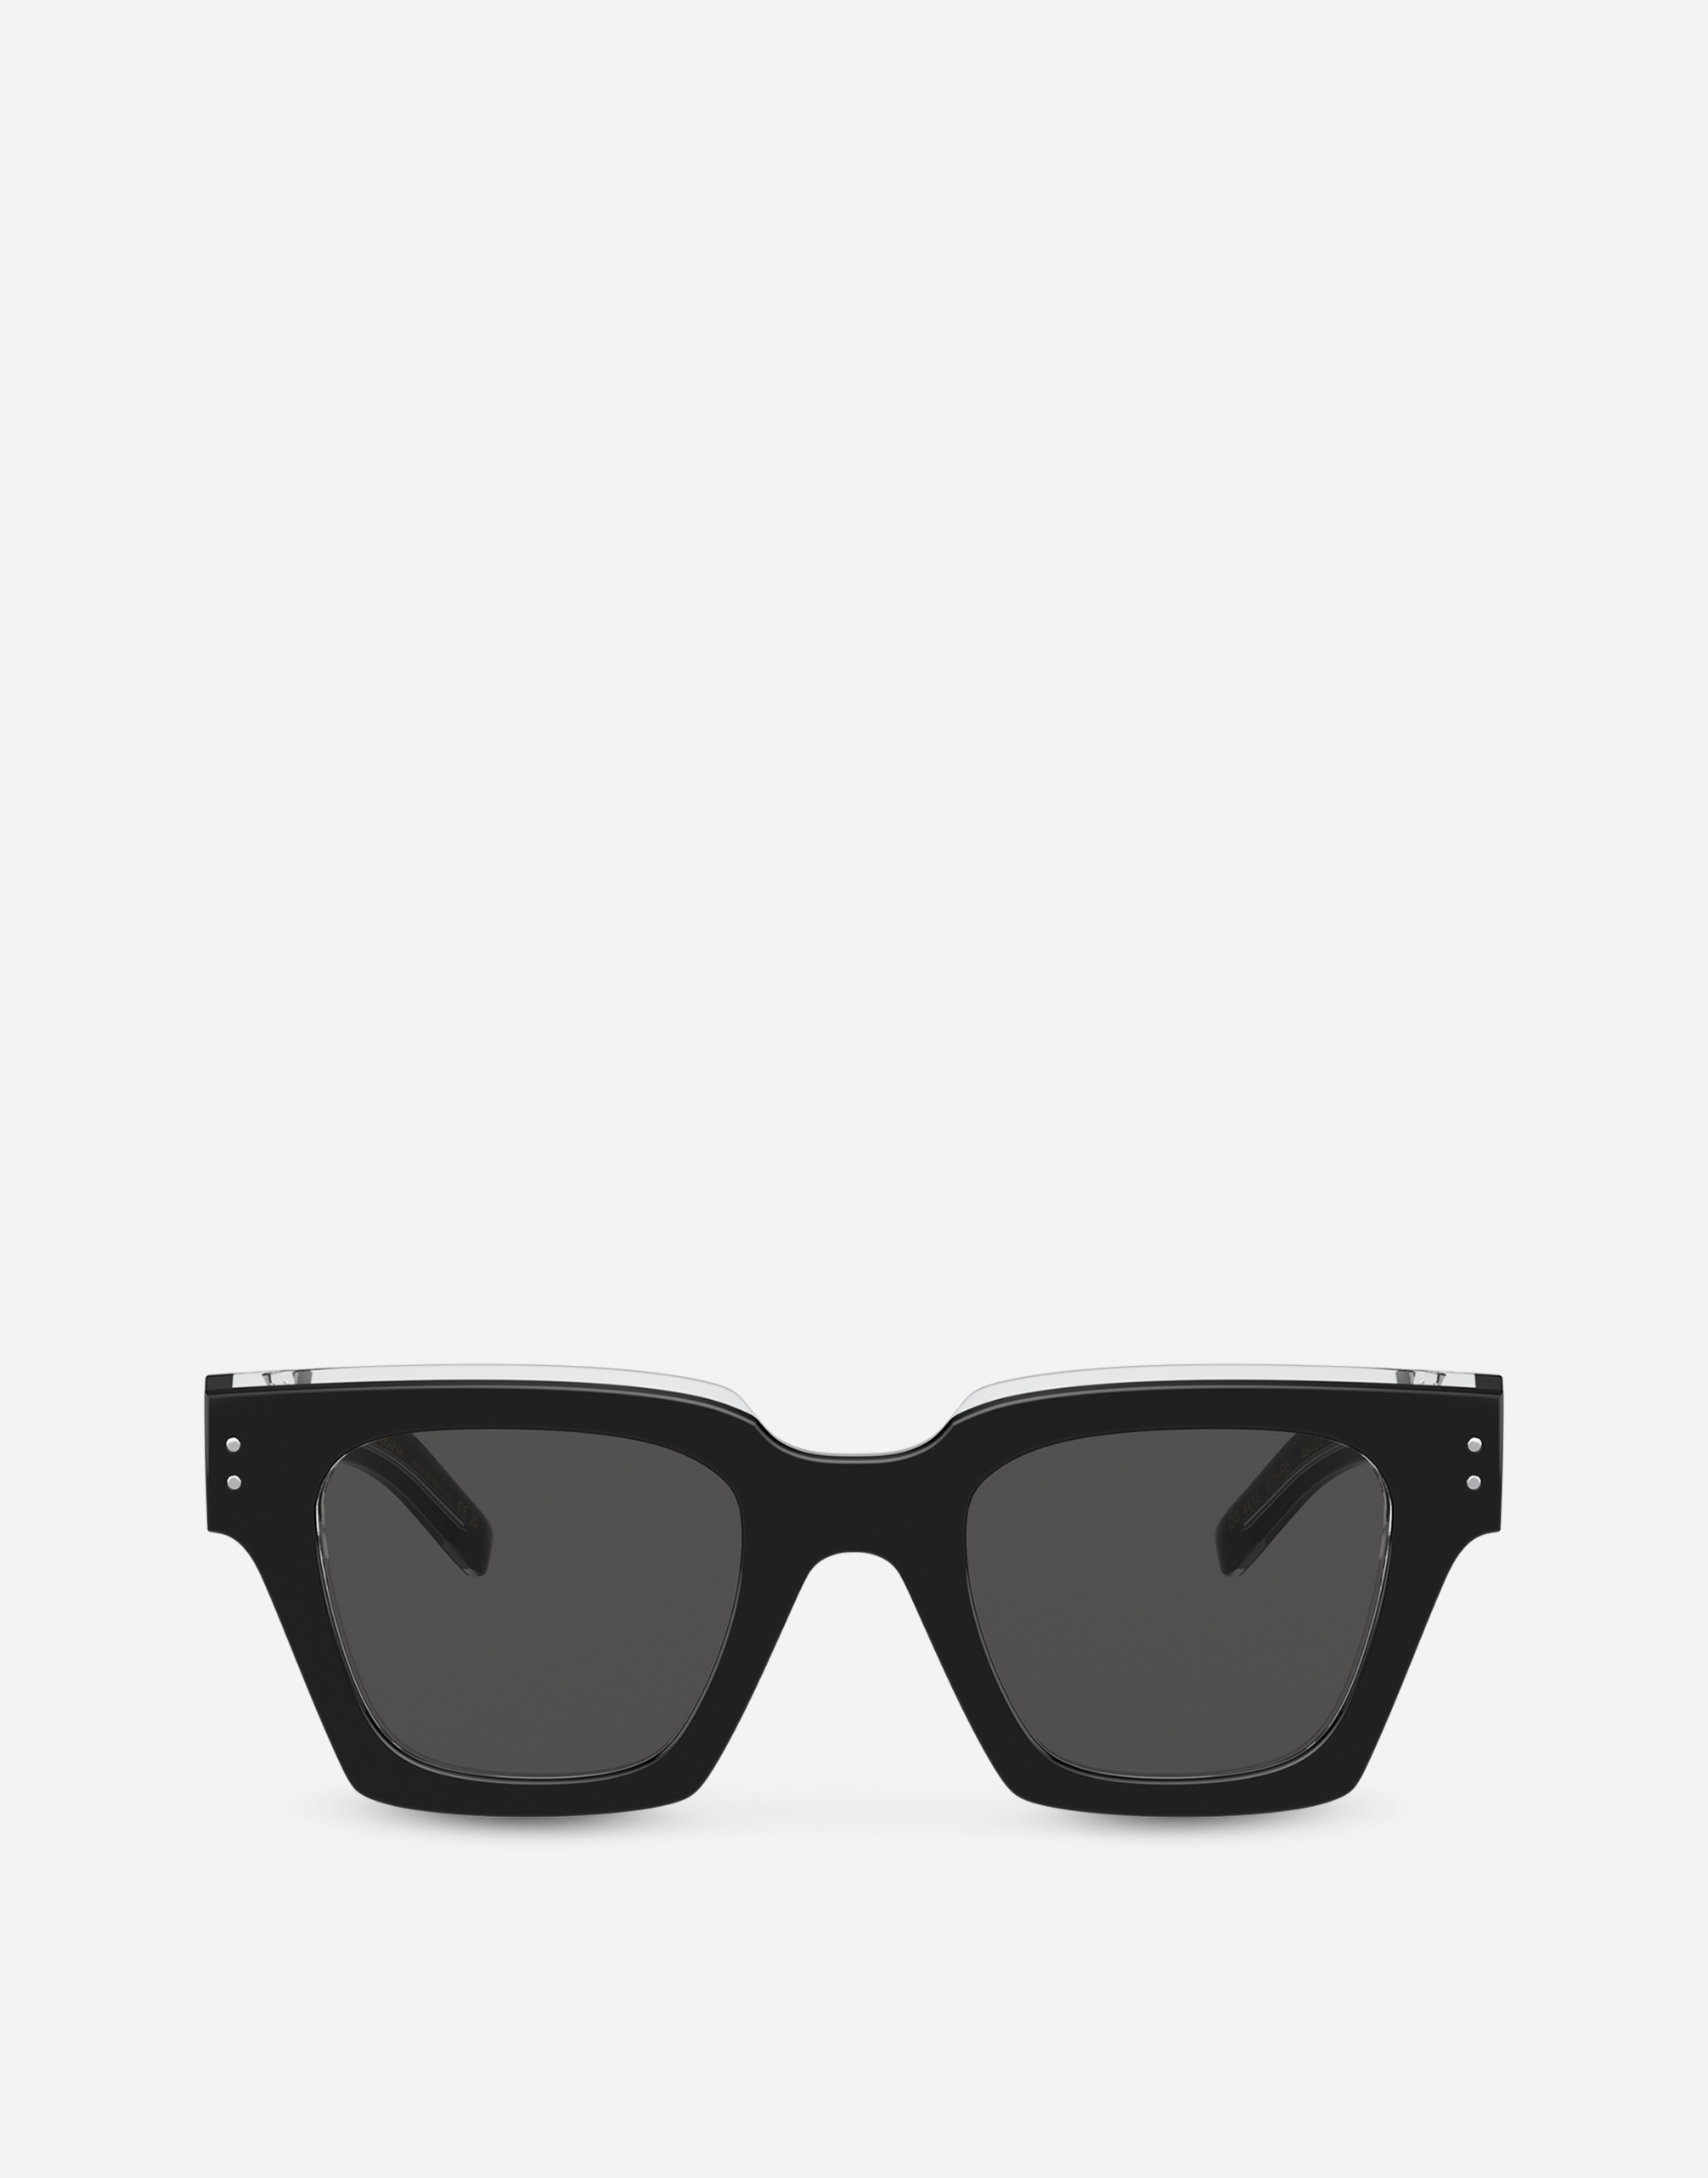 DG Icon sunglasses in Black